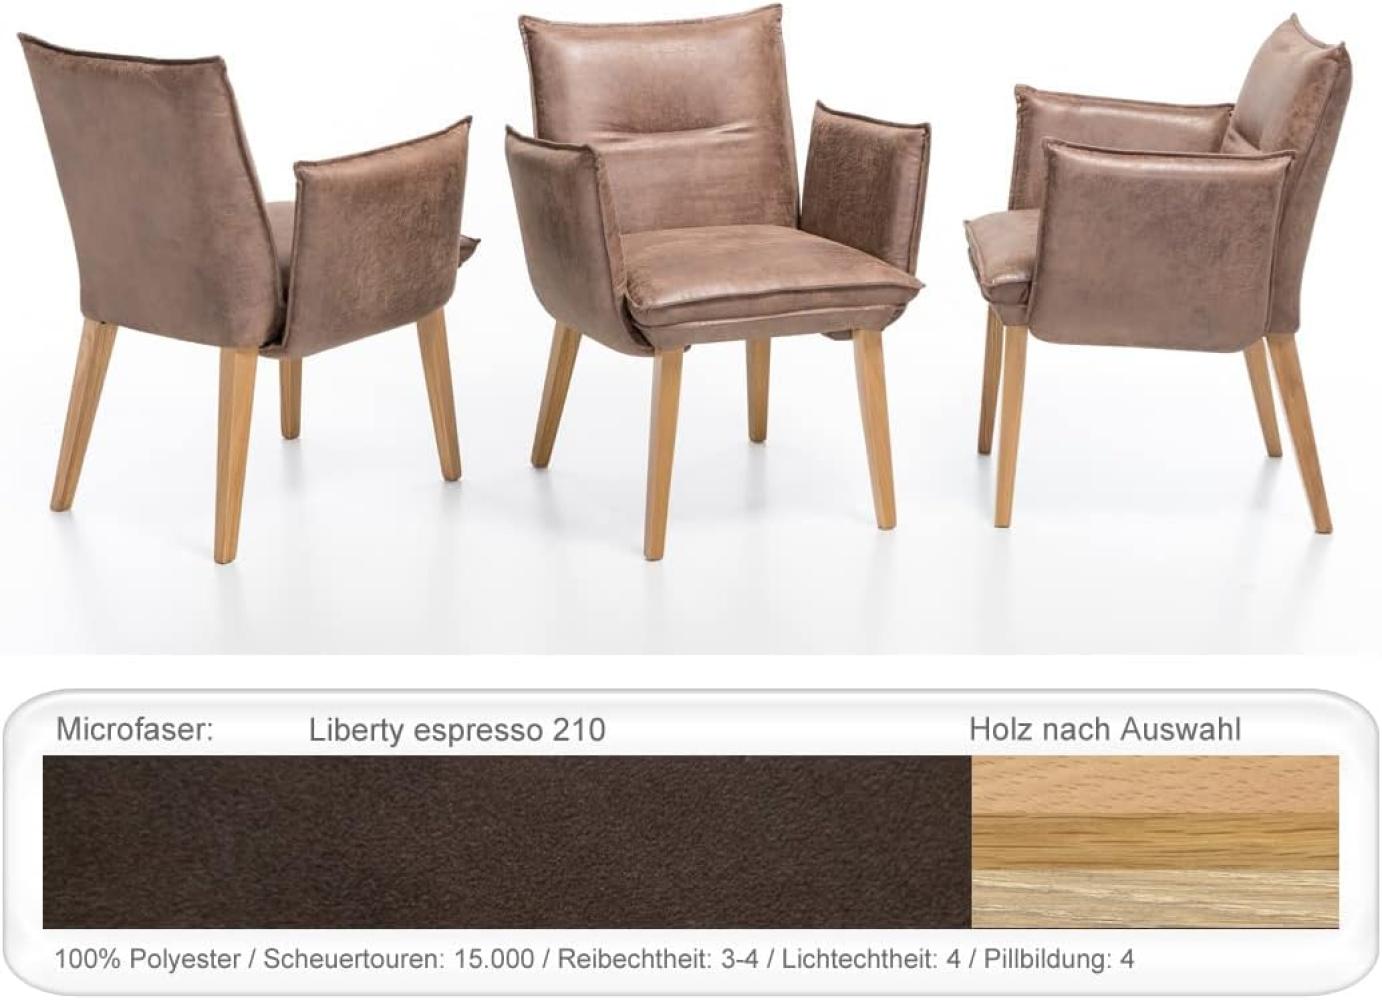 6x Sessel Gerit 2 Rücken mit Naht Polstersessel Esszimmer Massivholz Buche natur lackiert, Liberty espresso Bild 1